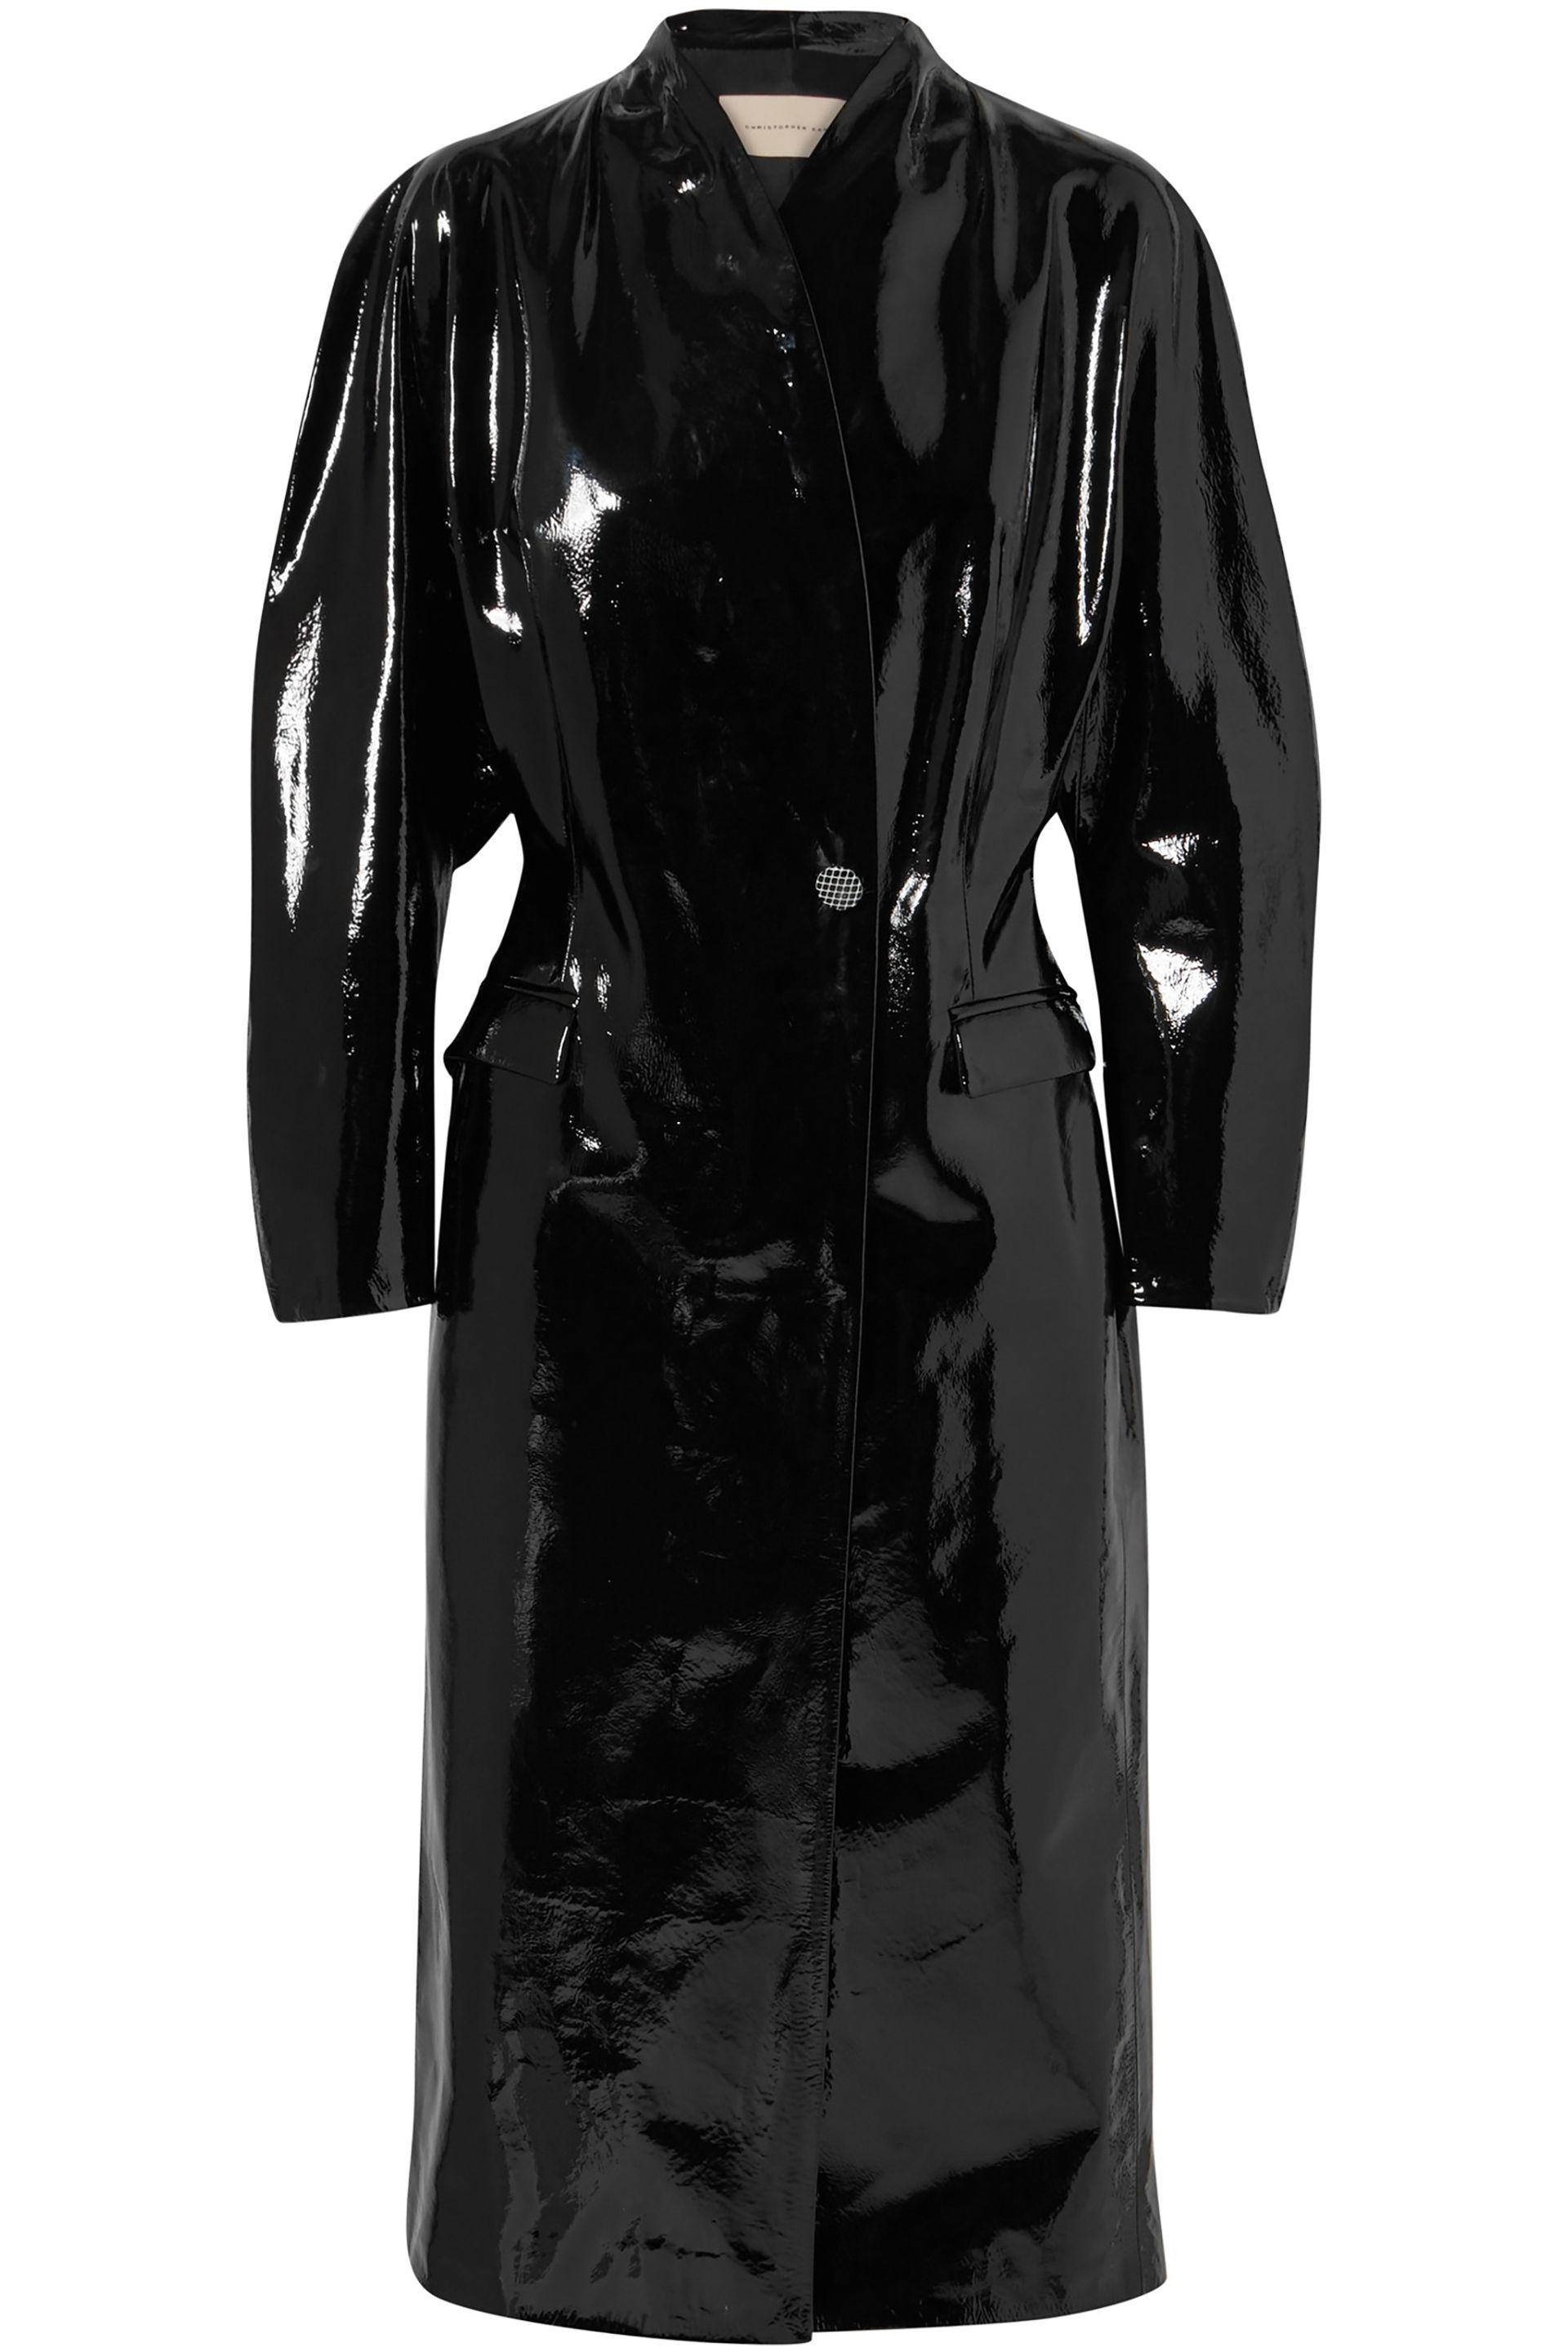 Christopher Kane Crinkled Patent-leather Coat Black - Save 40% - Lyst